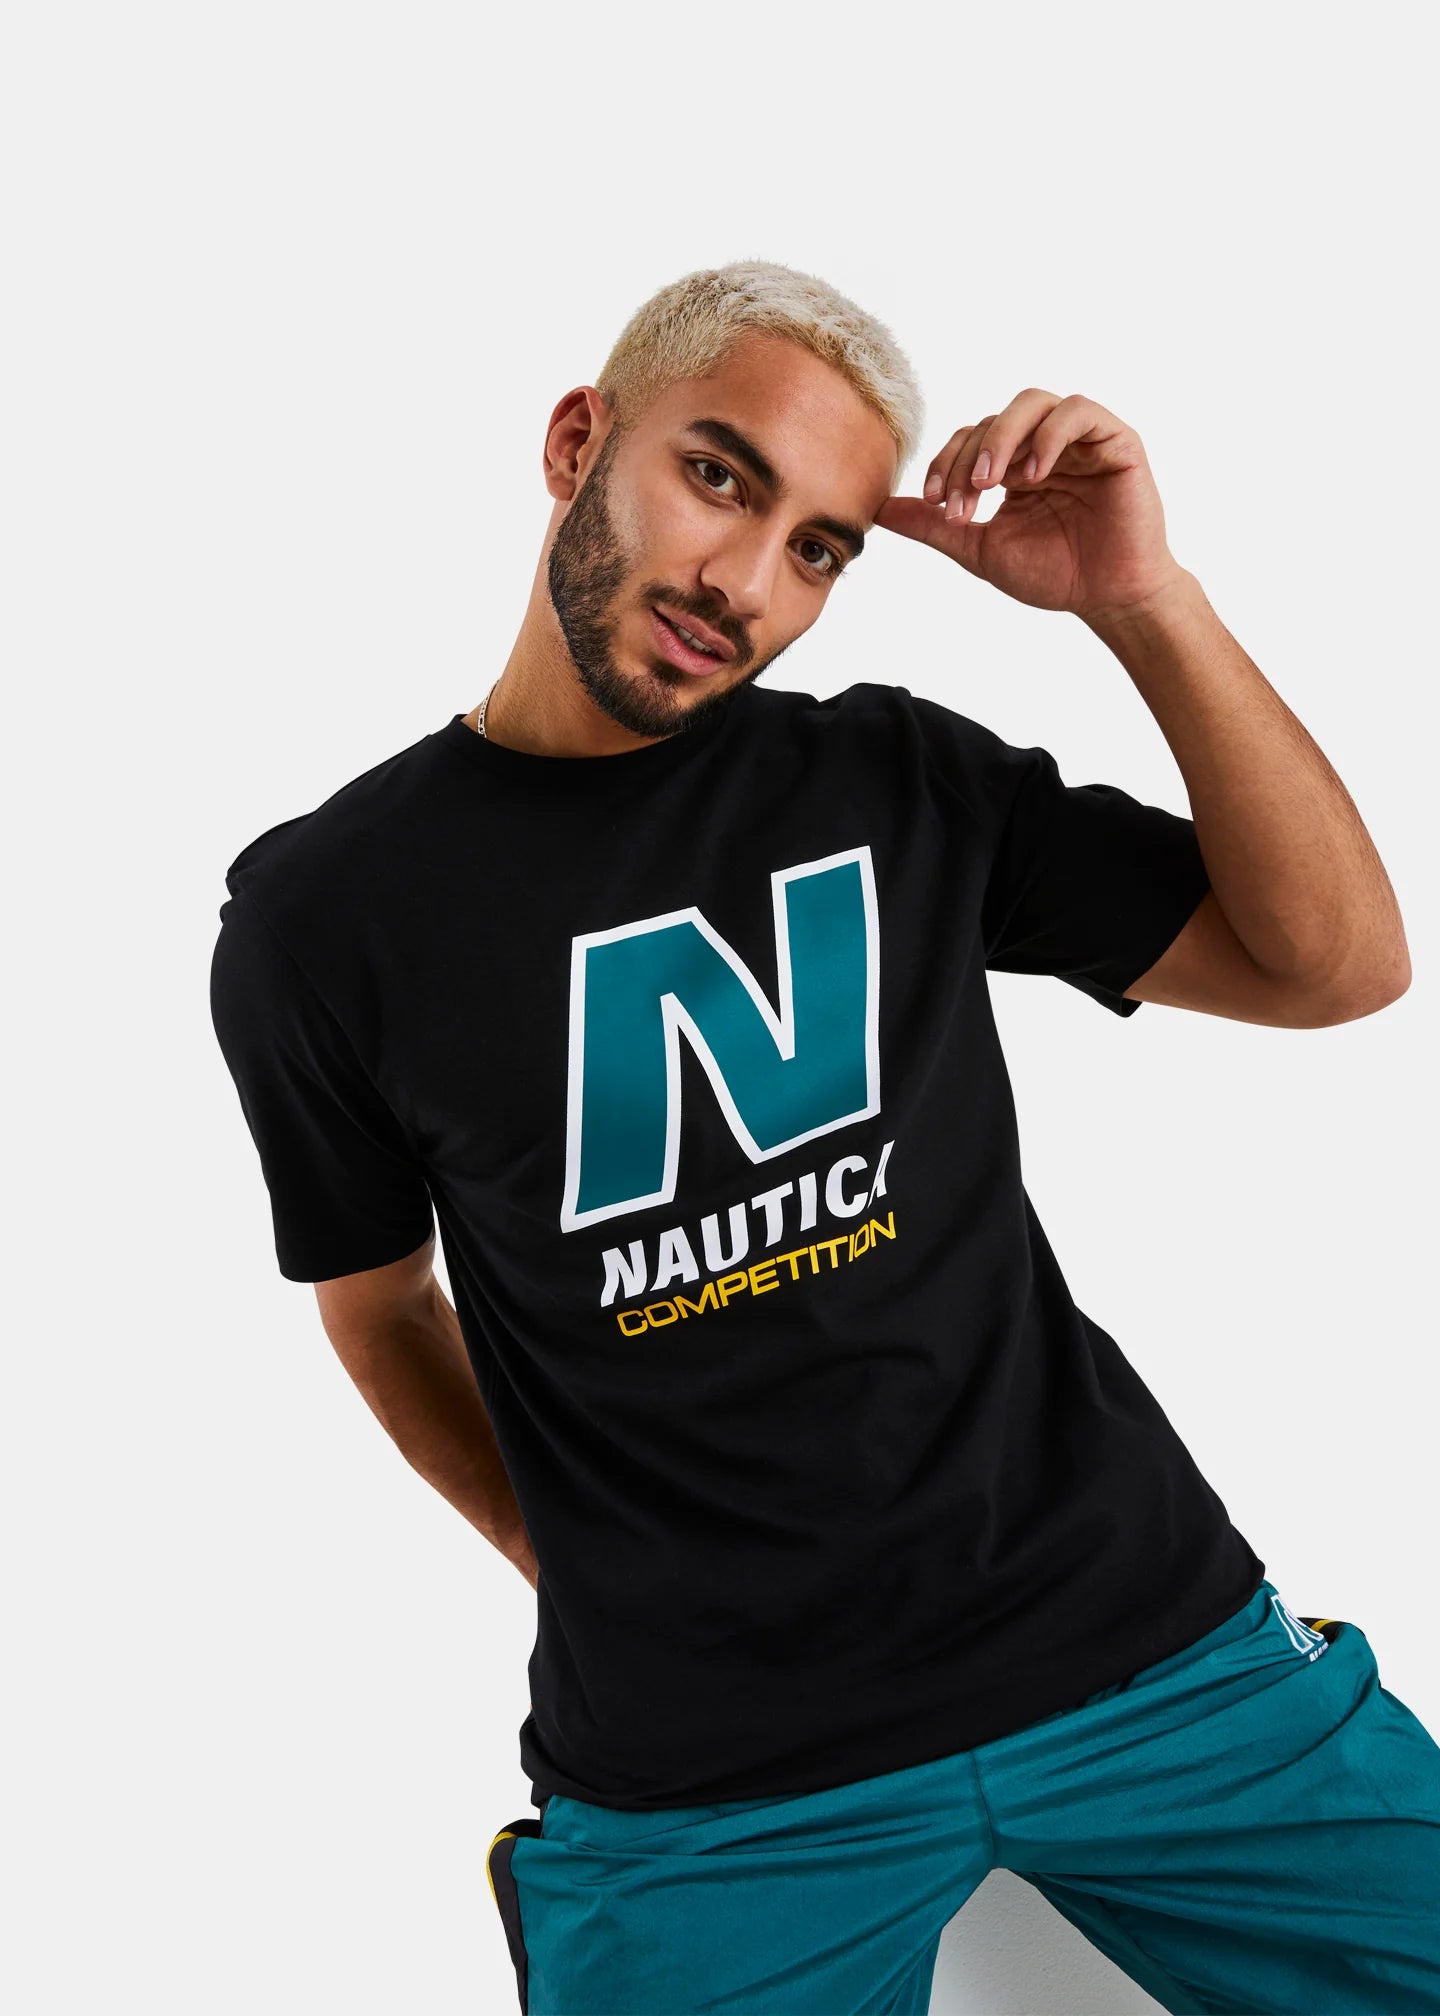 Nautica Wessix T-Shirt